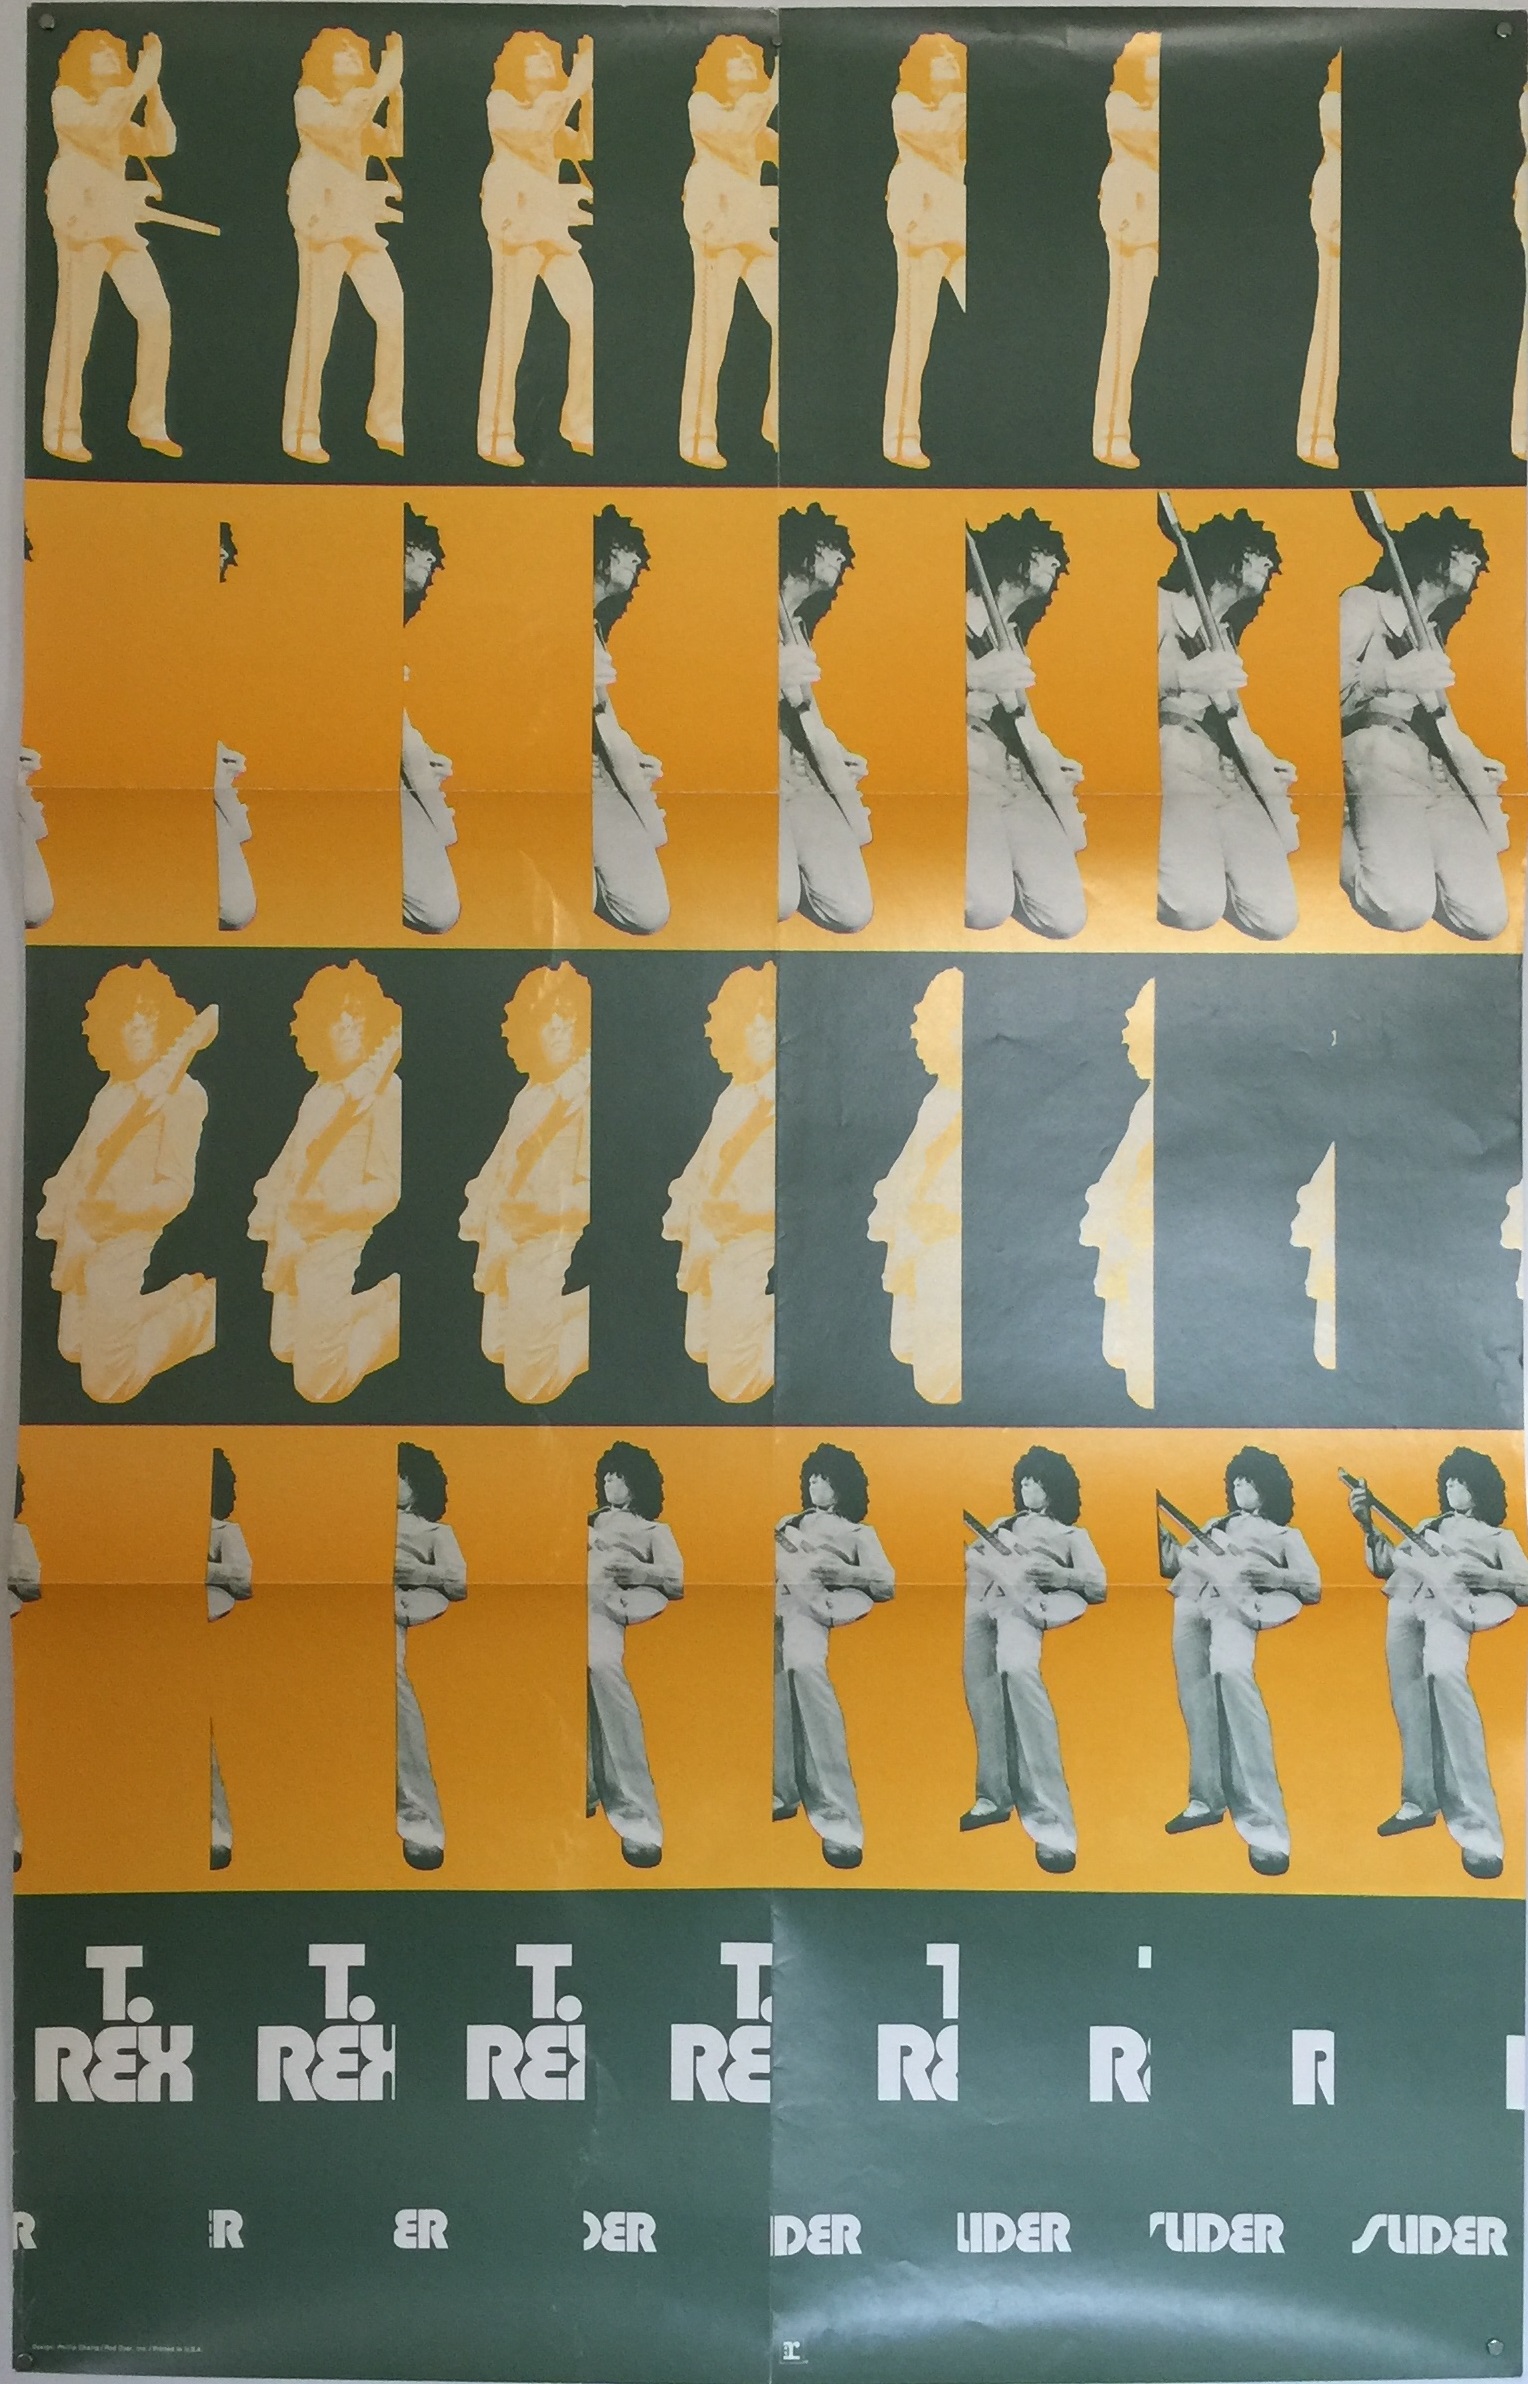 T REX / MARC BOLAN SLIDER POSTER. An original US Reprise Records poster advertising T.